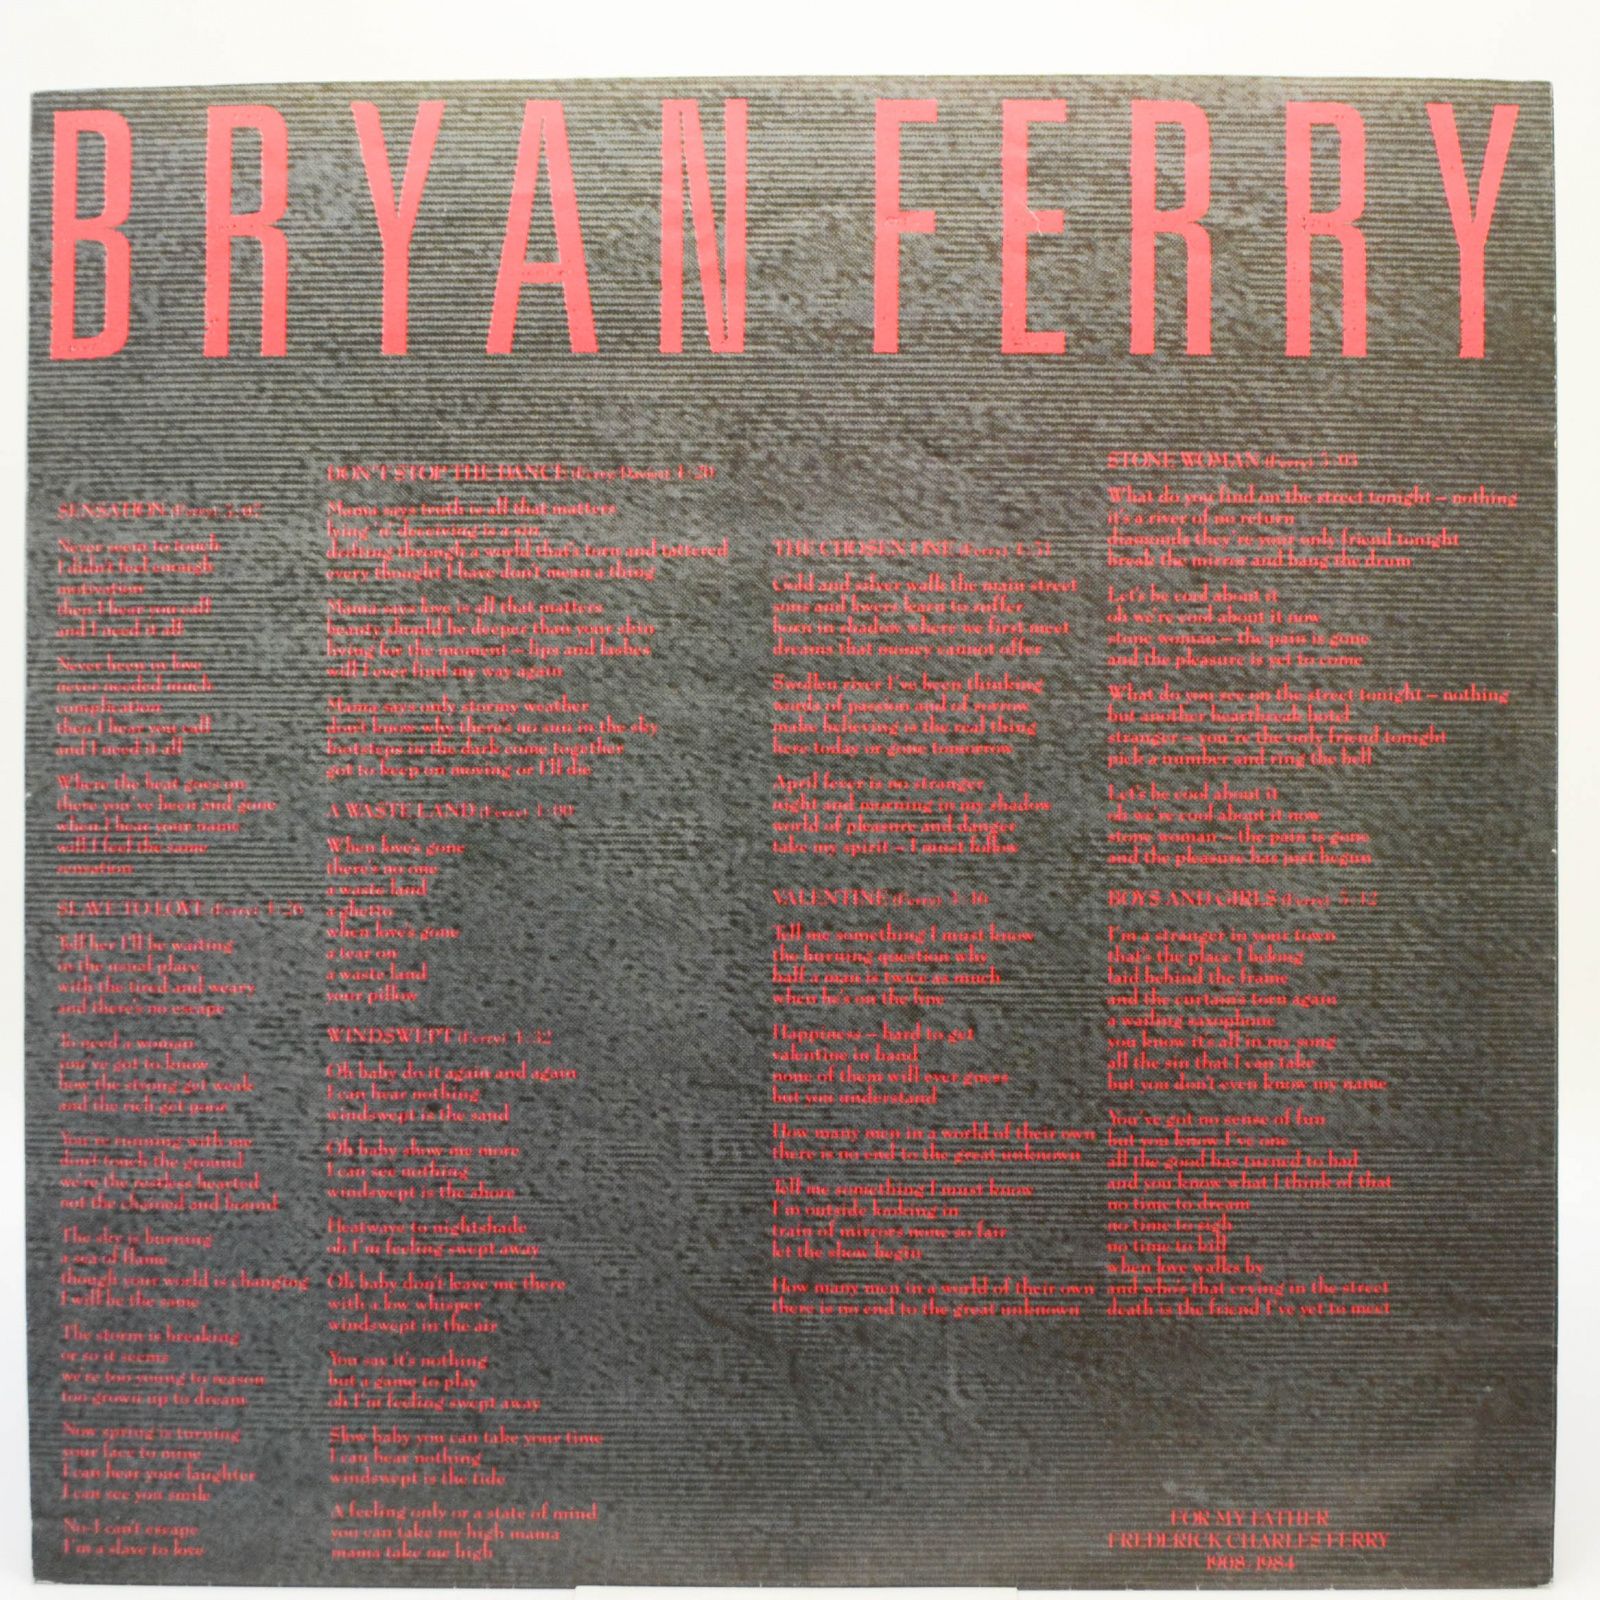 Bryan Ferry — Boys And Girls, 1985